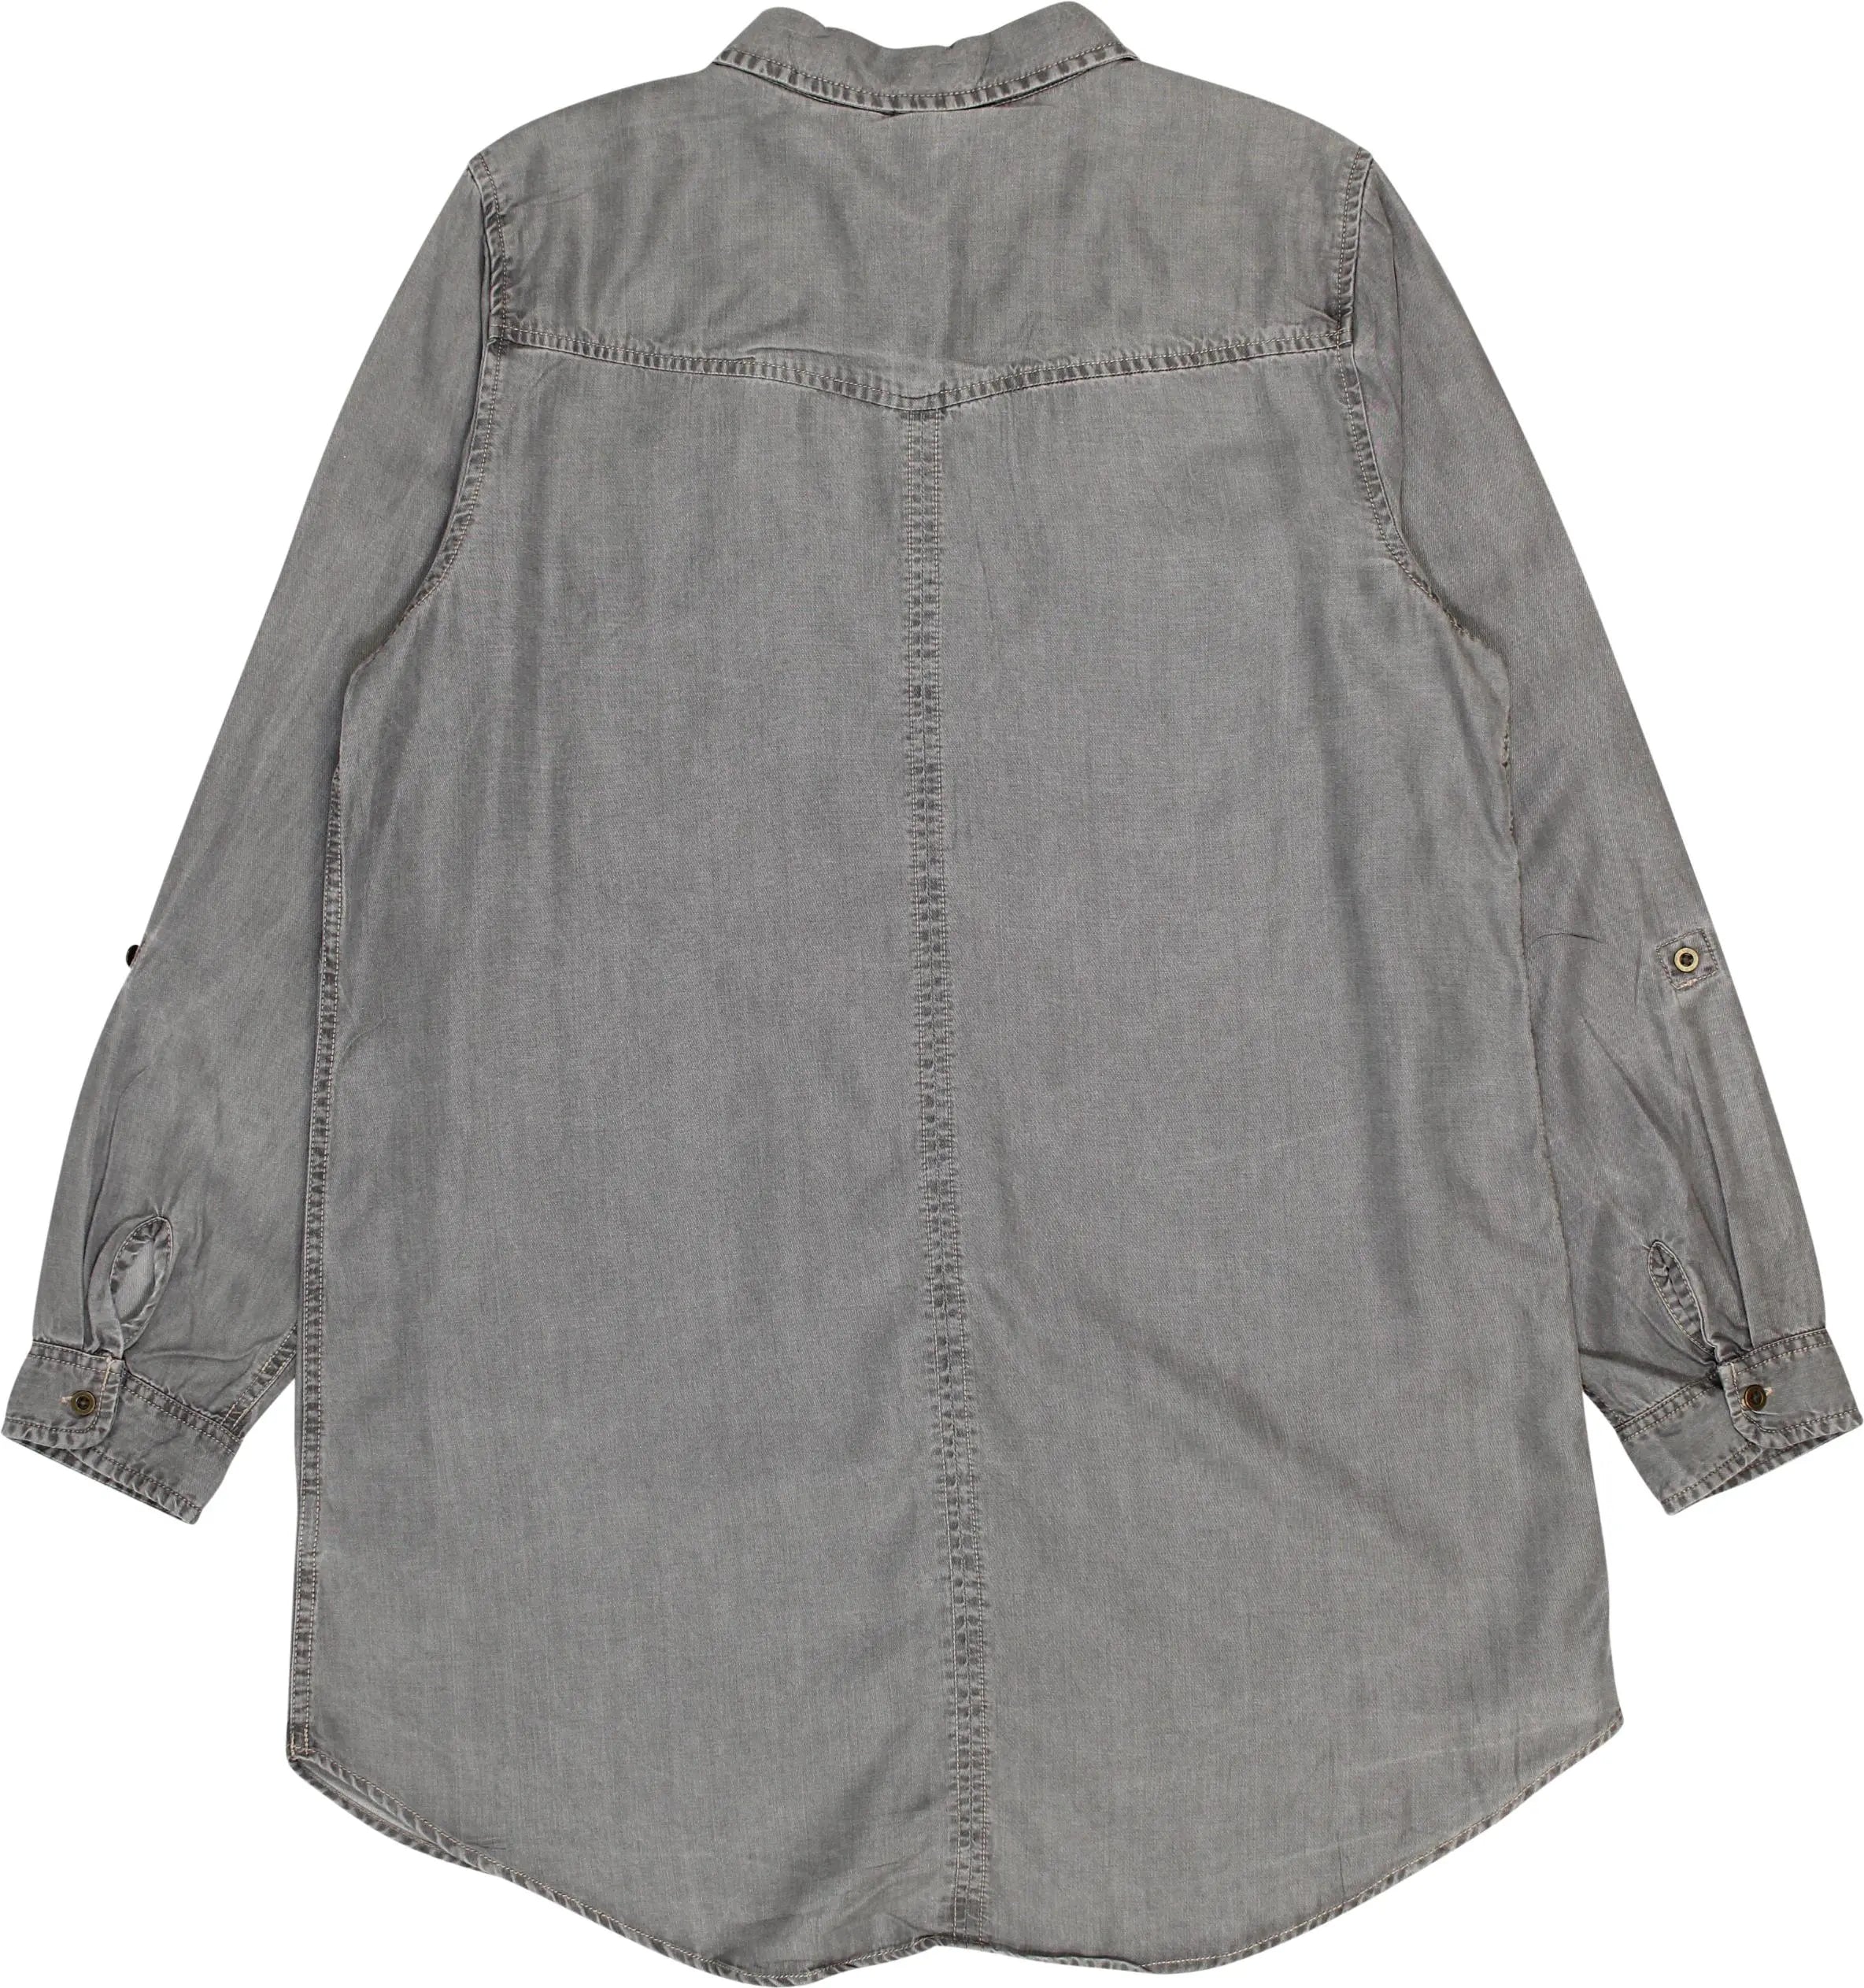 Miss Etam - Denim Shirt Dress- ThriftTale.com - Vintage and second handclothing